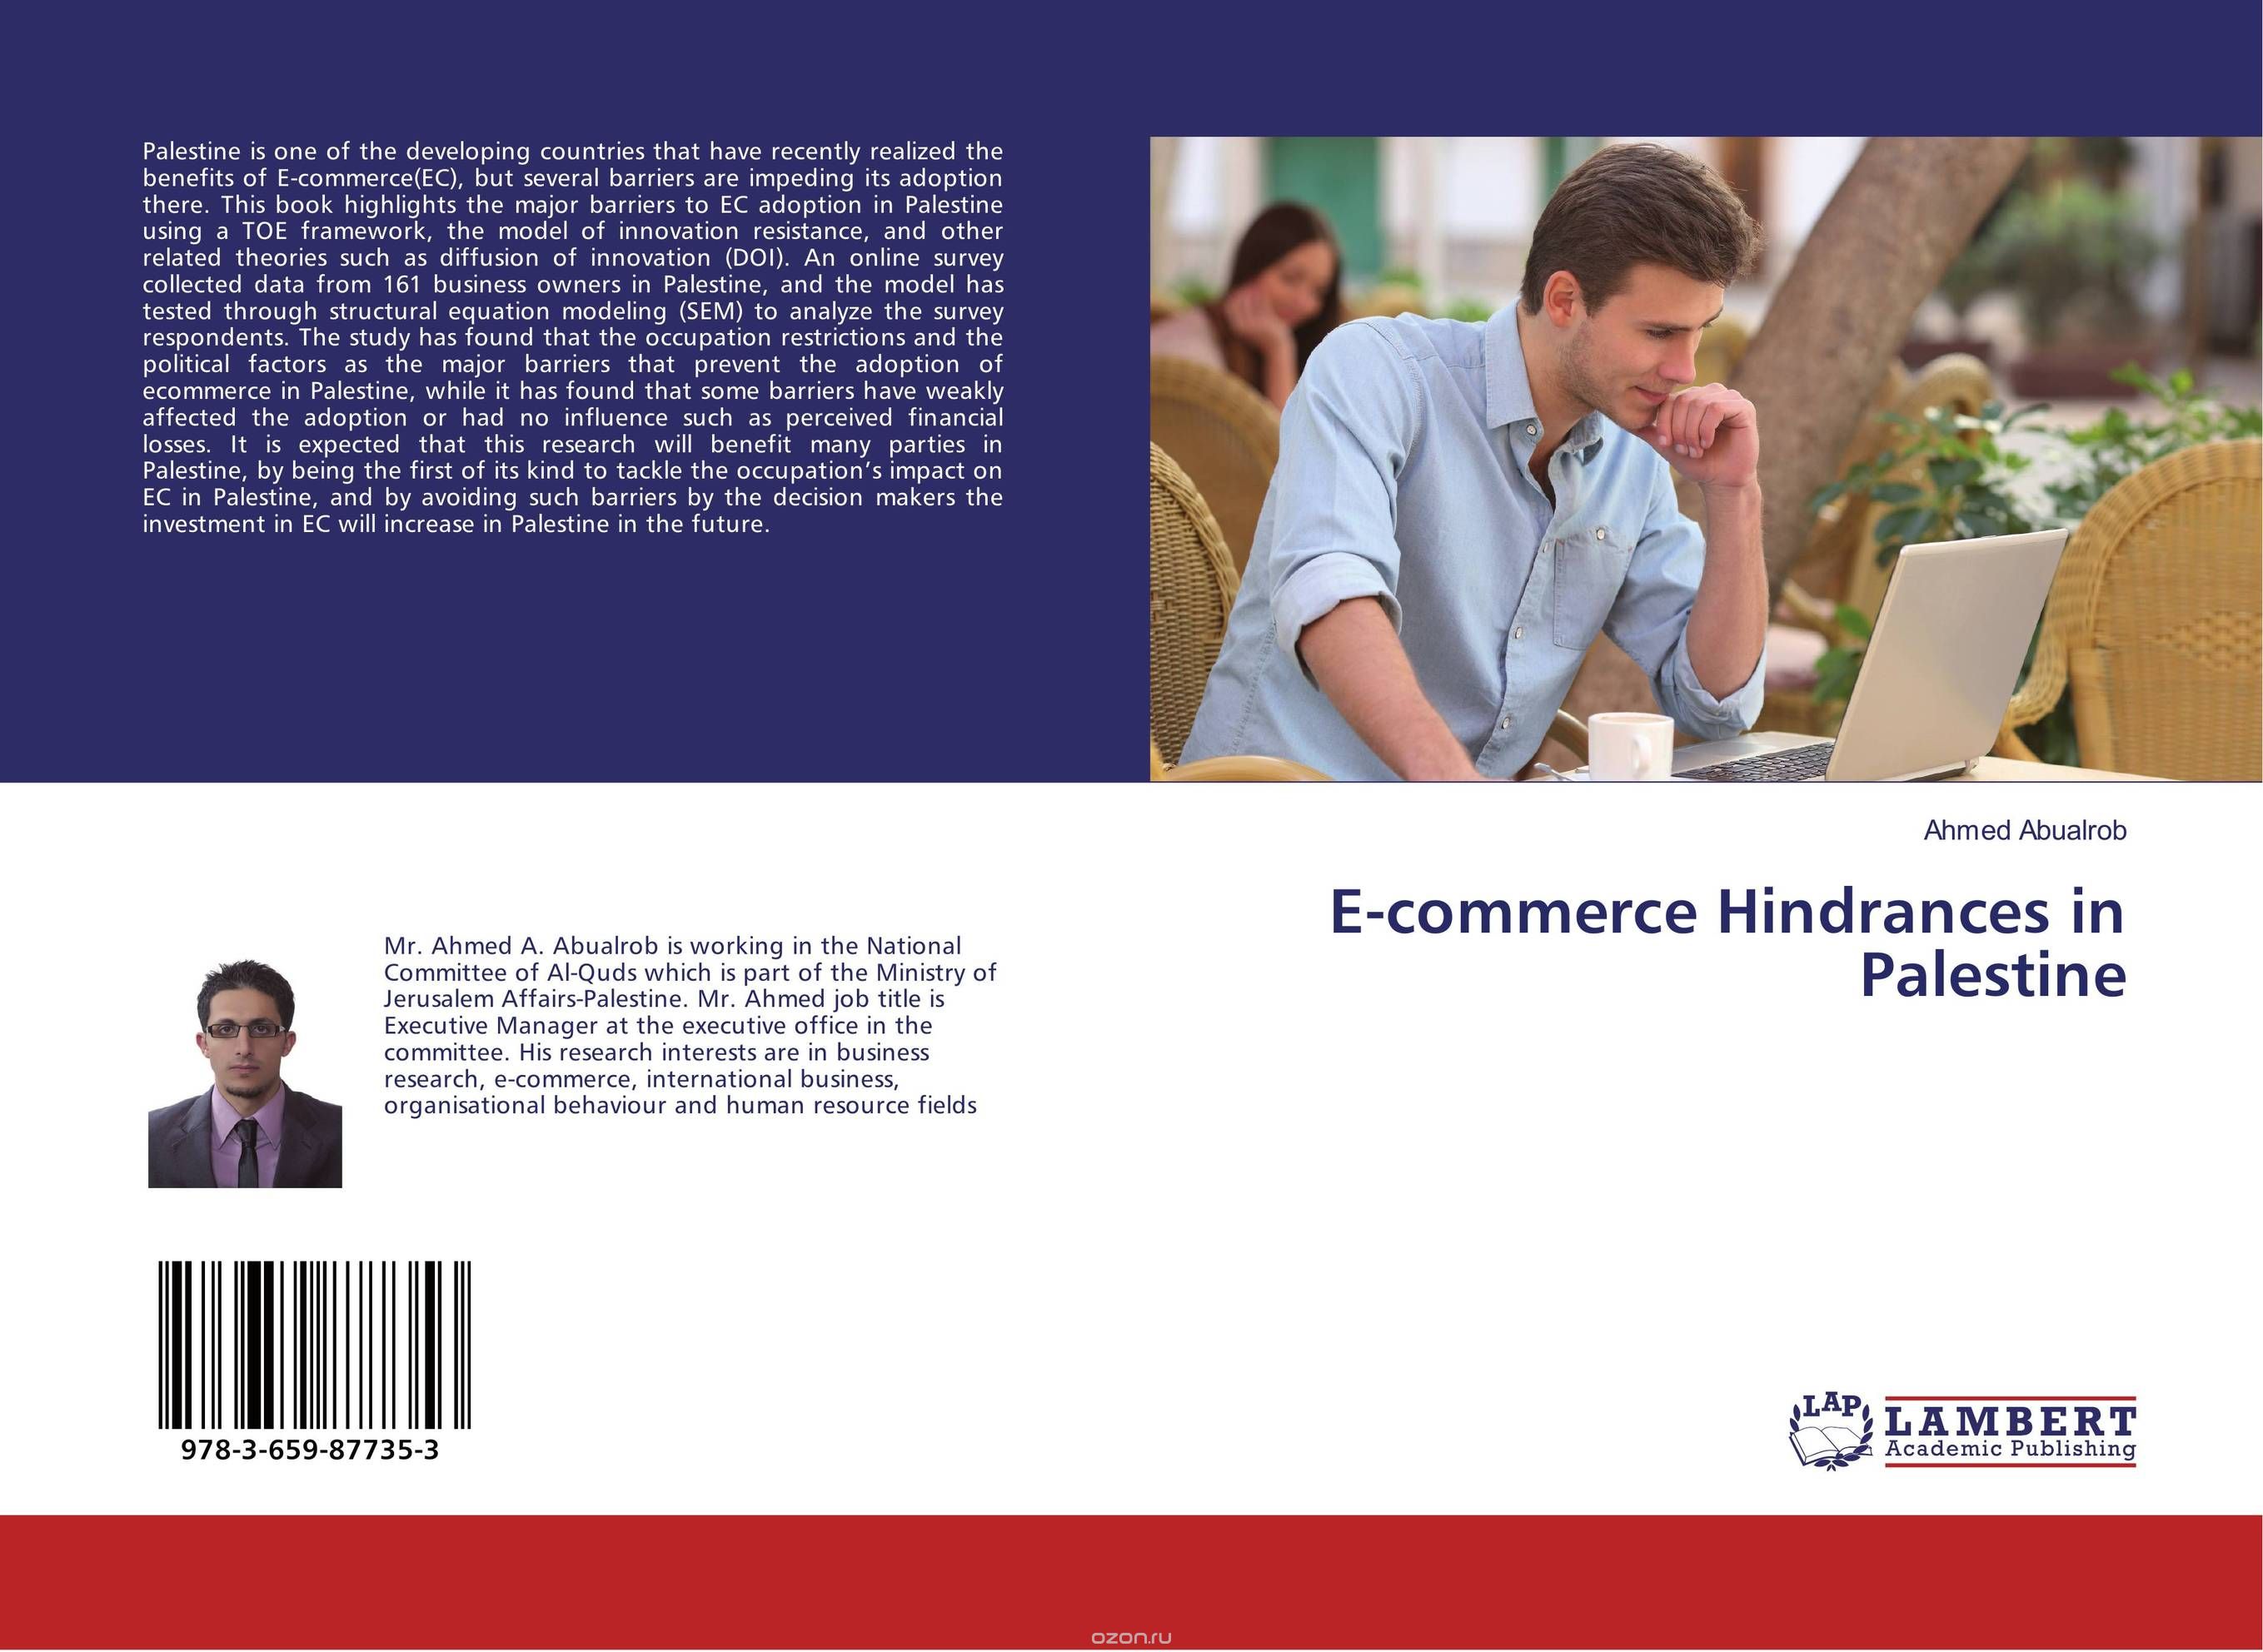 Скачать книгу "E-commerce Hindrances in Palestine"